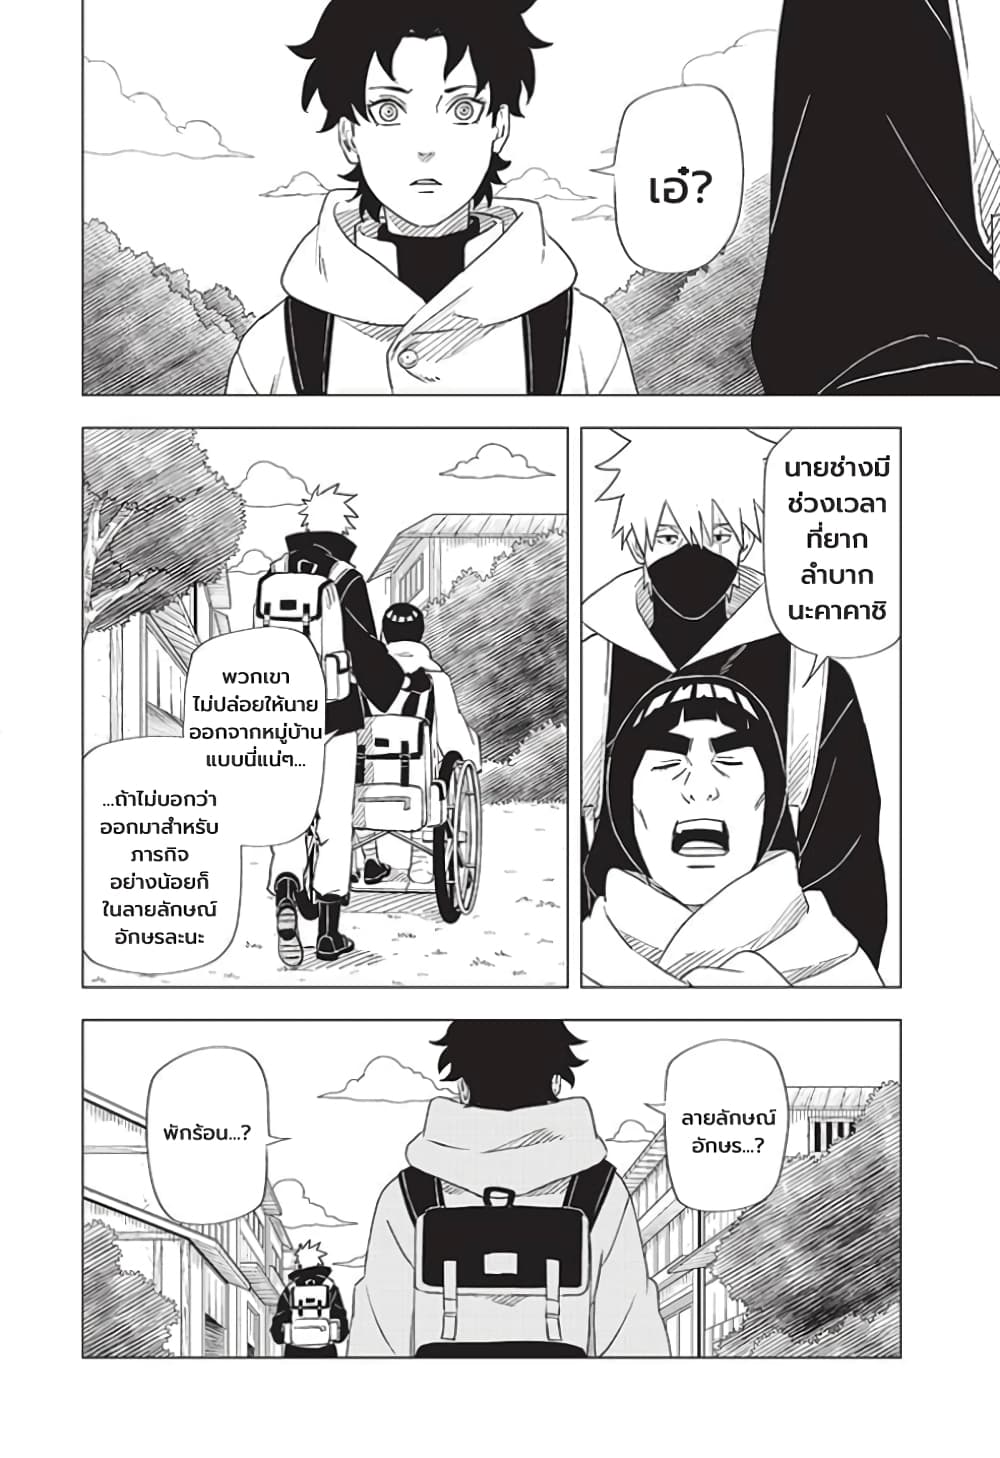 Naruto: Konoha's Story - The Steam Ninja Scrolls: The Manga 3-สถานที่ศิกดิ์สิทธิ์ของคาคาชิ